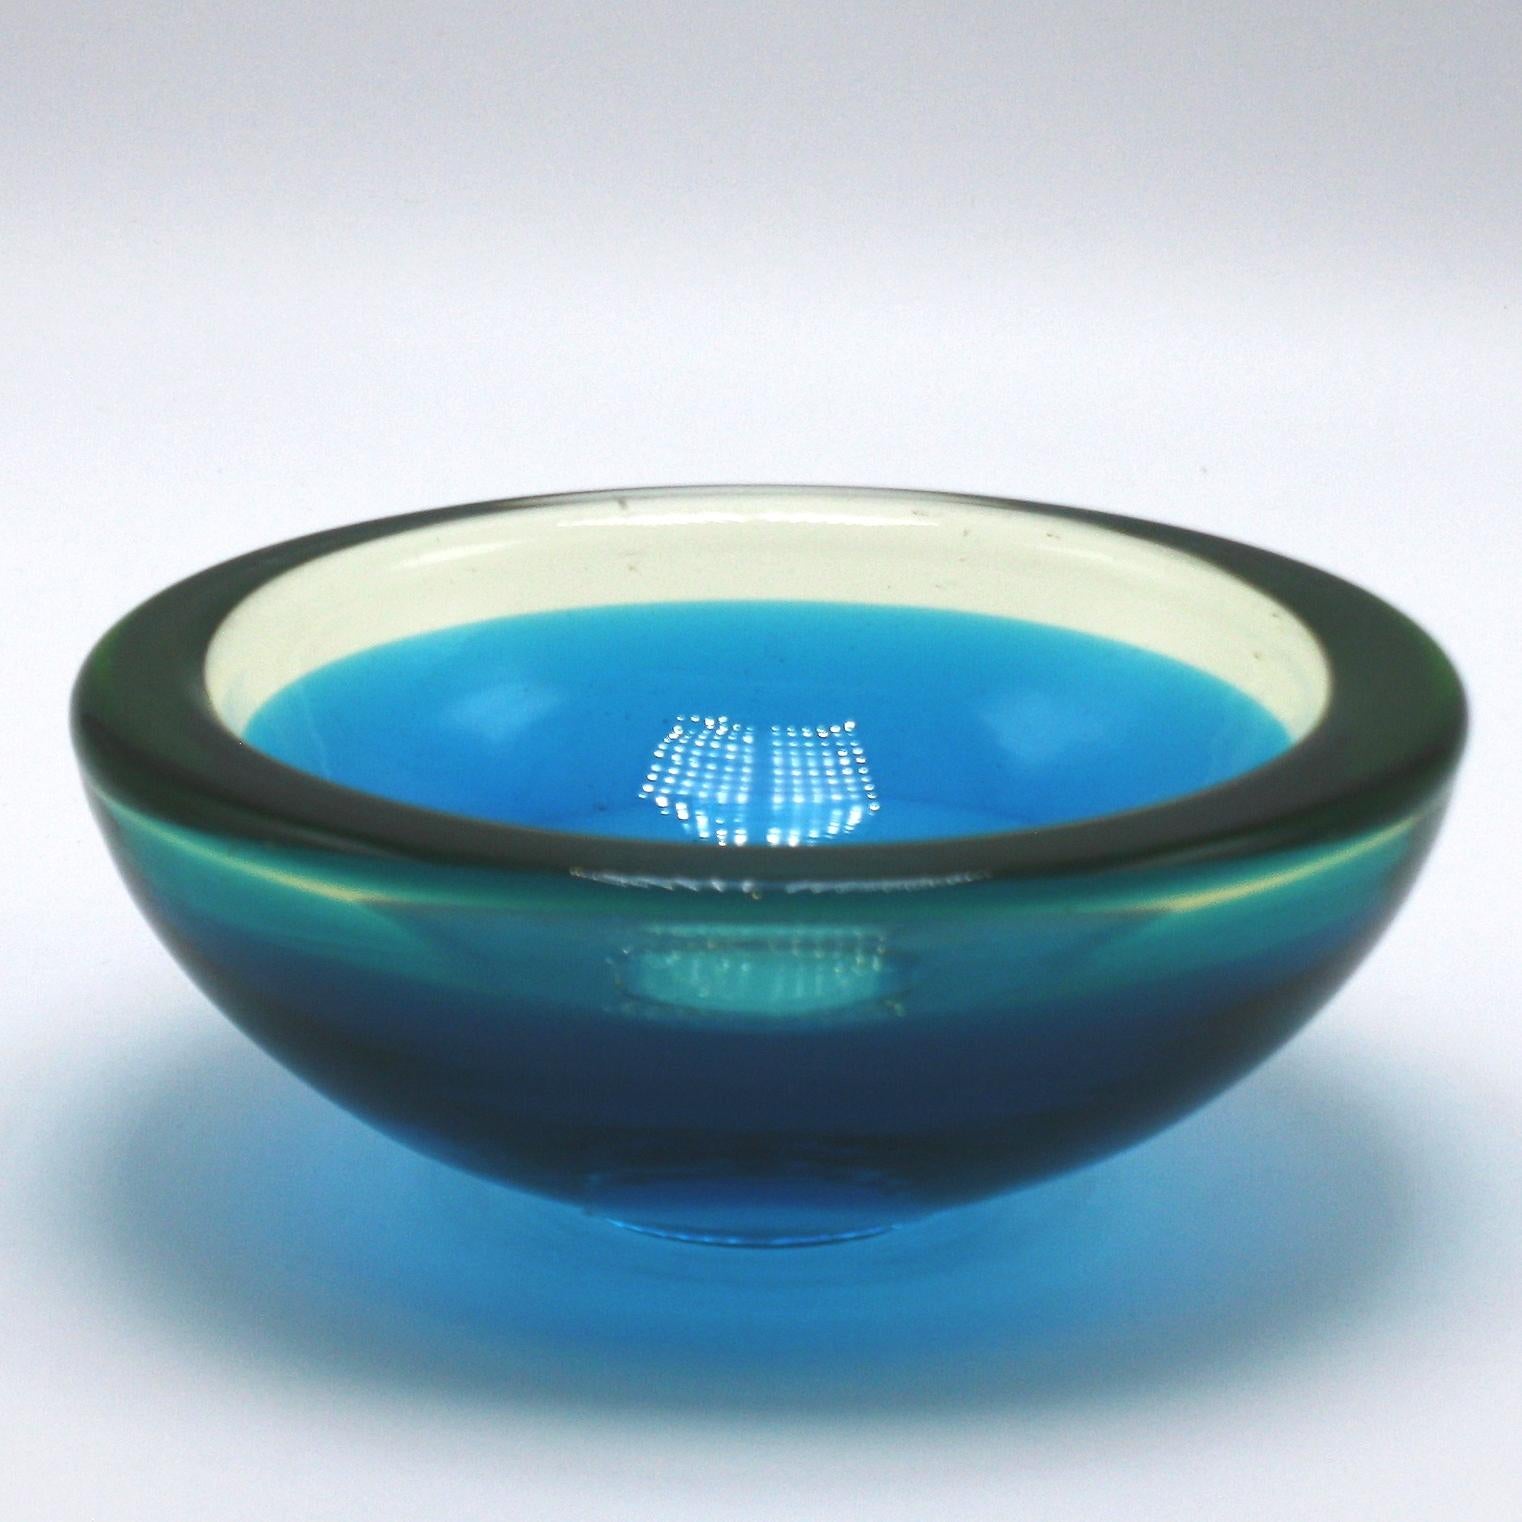 Blue and green Murano glass bowl, circa 1960
Measures: 6 1/2” diameter x 2 1/4” height.